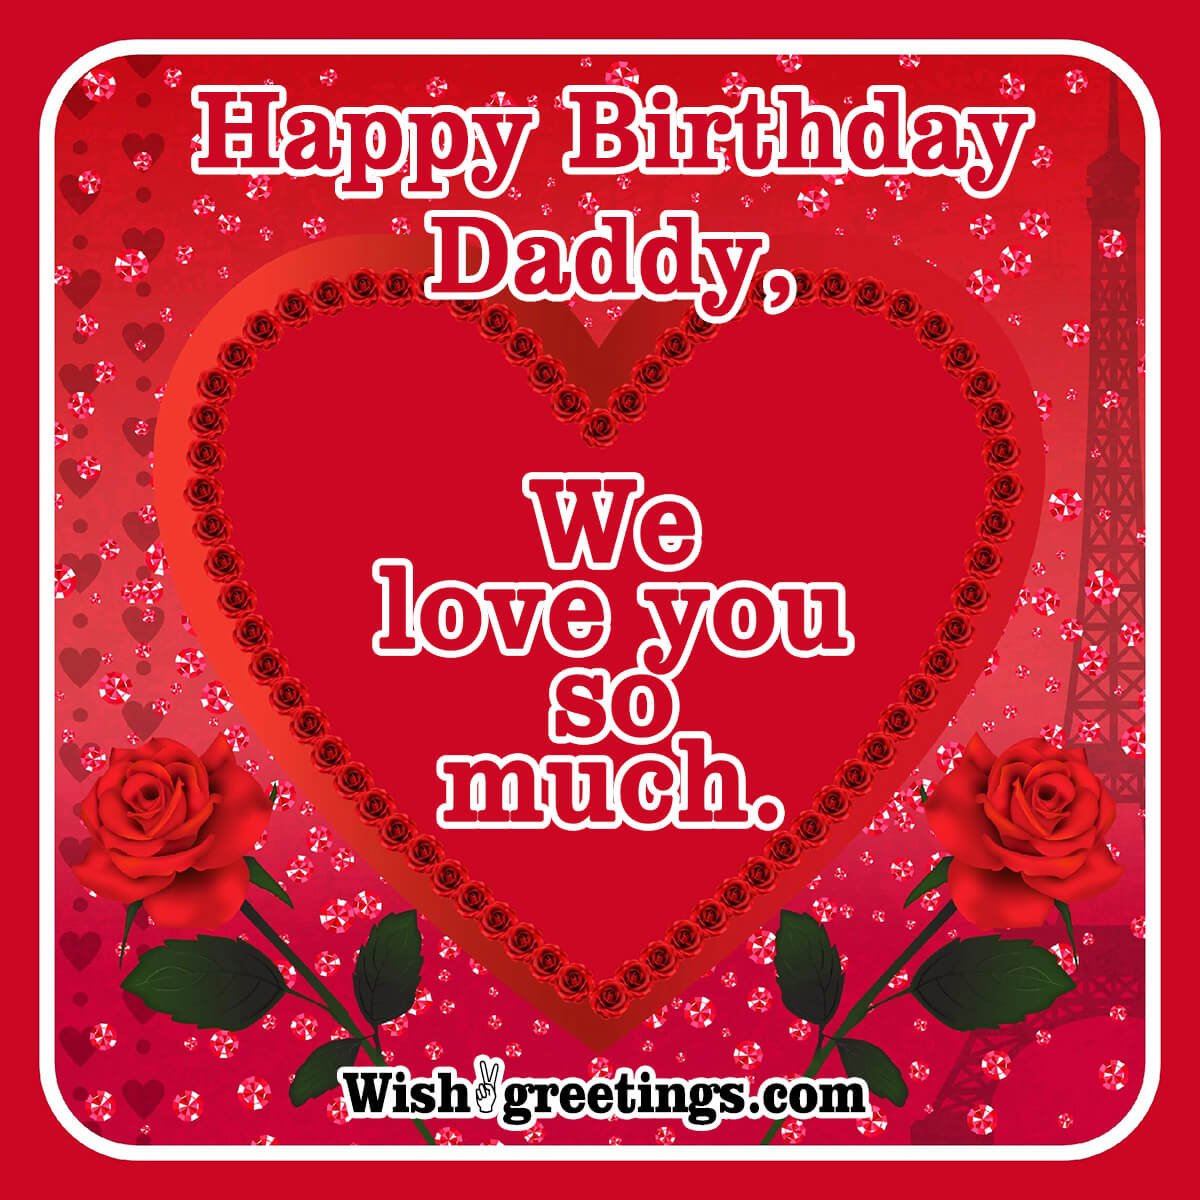 Happy Birthday Daddy Image